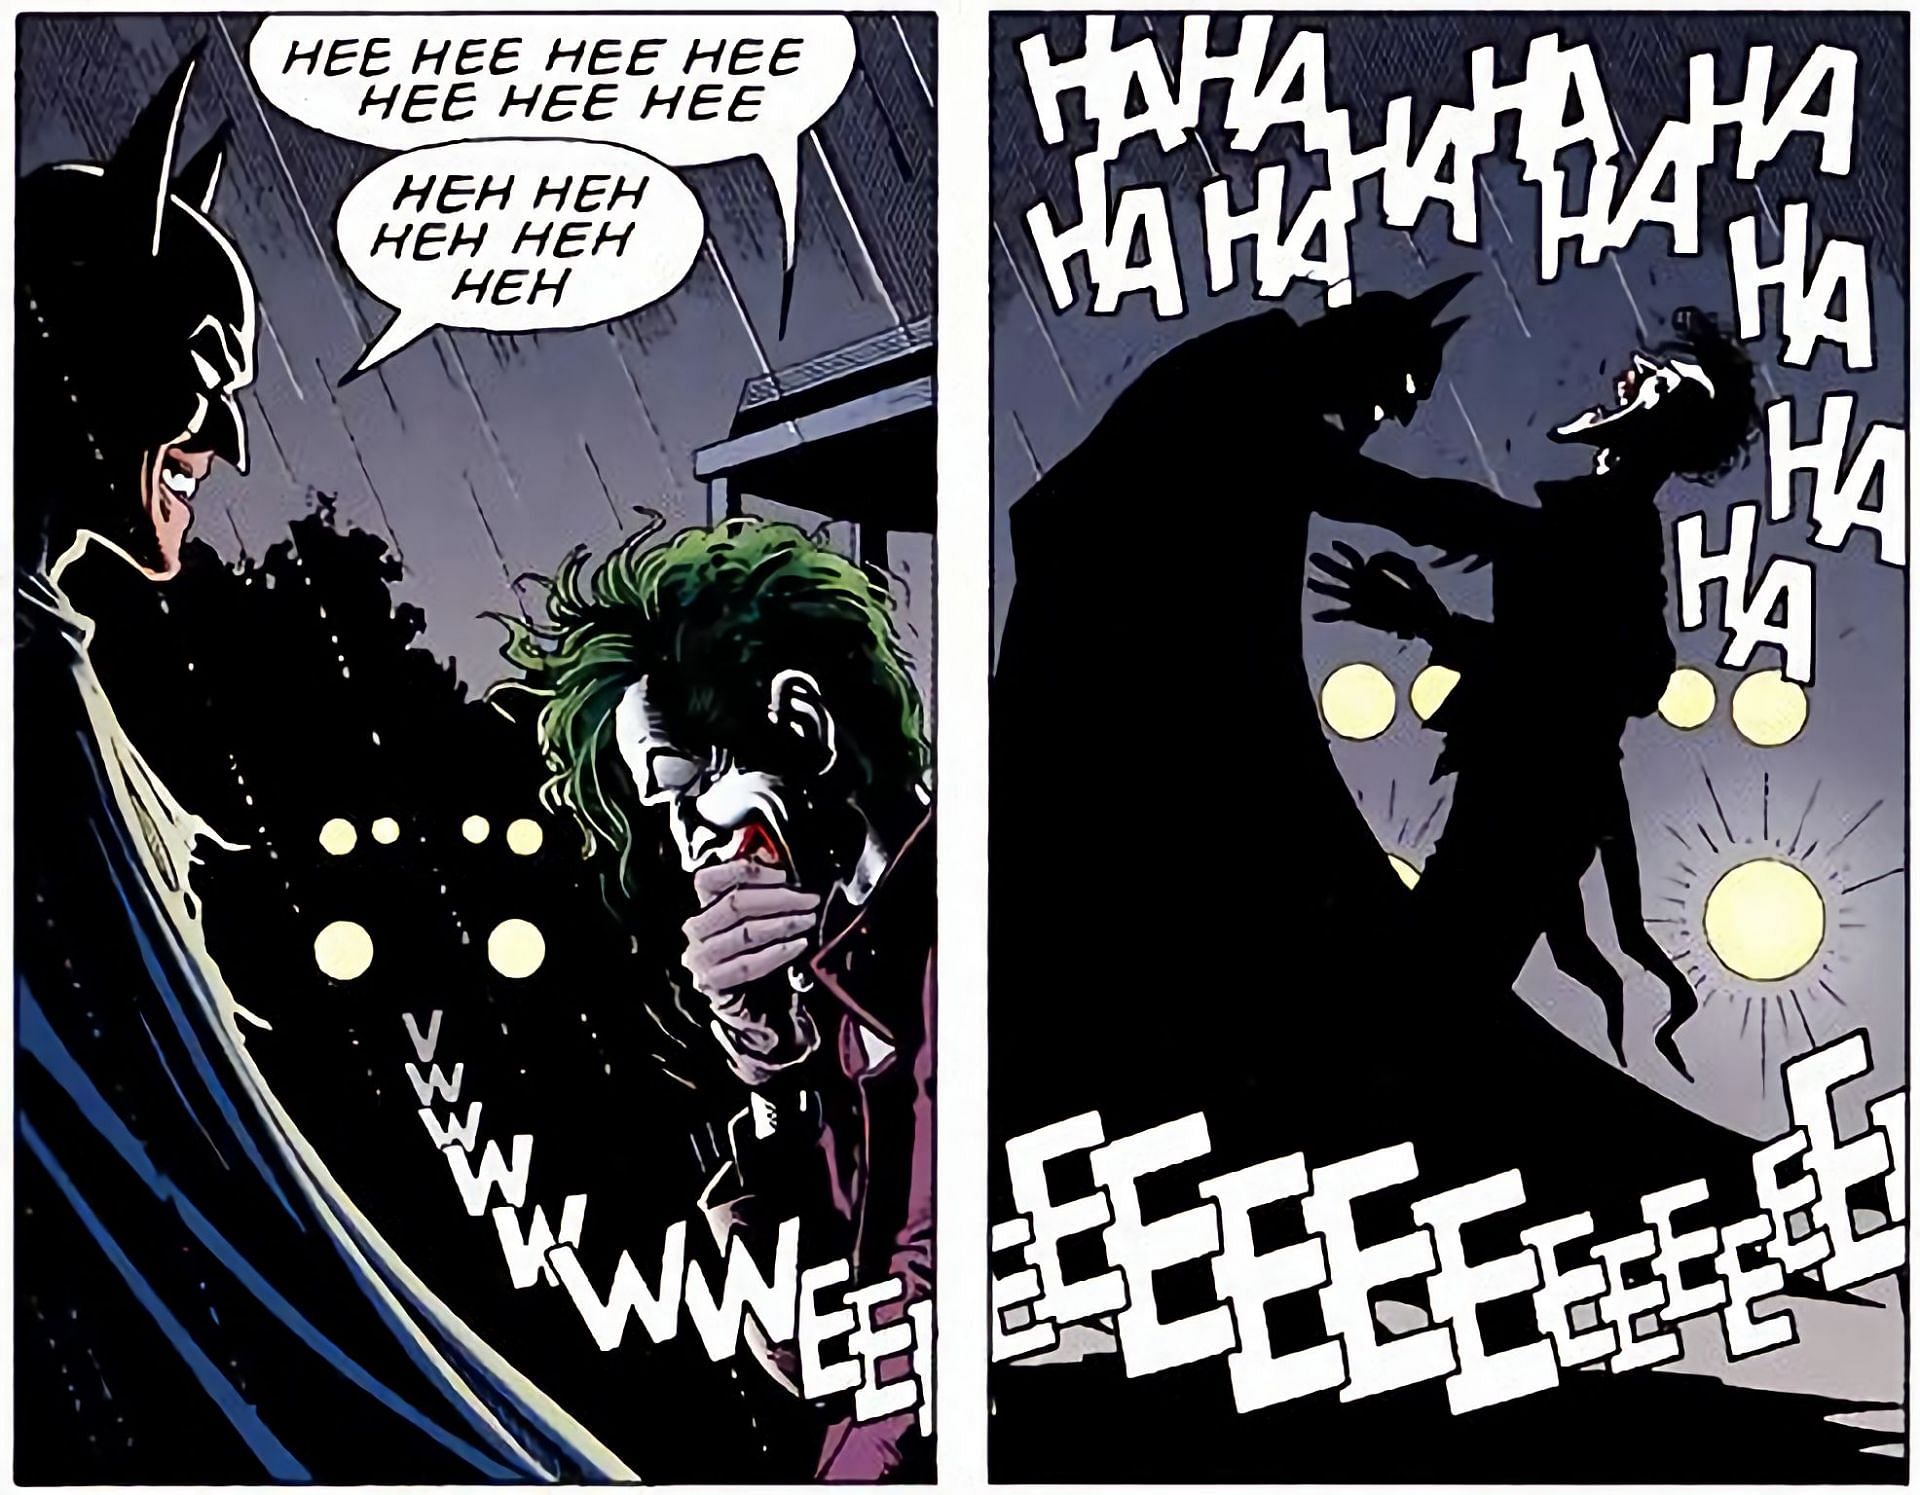 Top 5 Batman comics every fan should read before they die